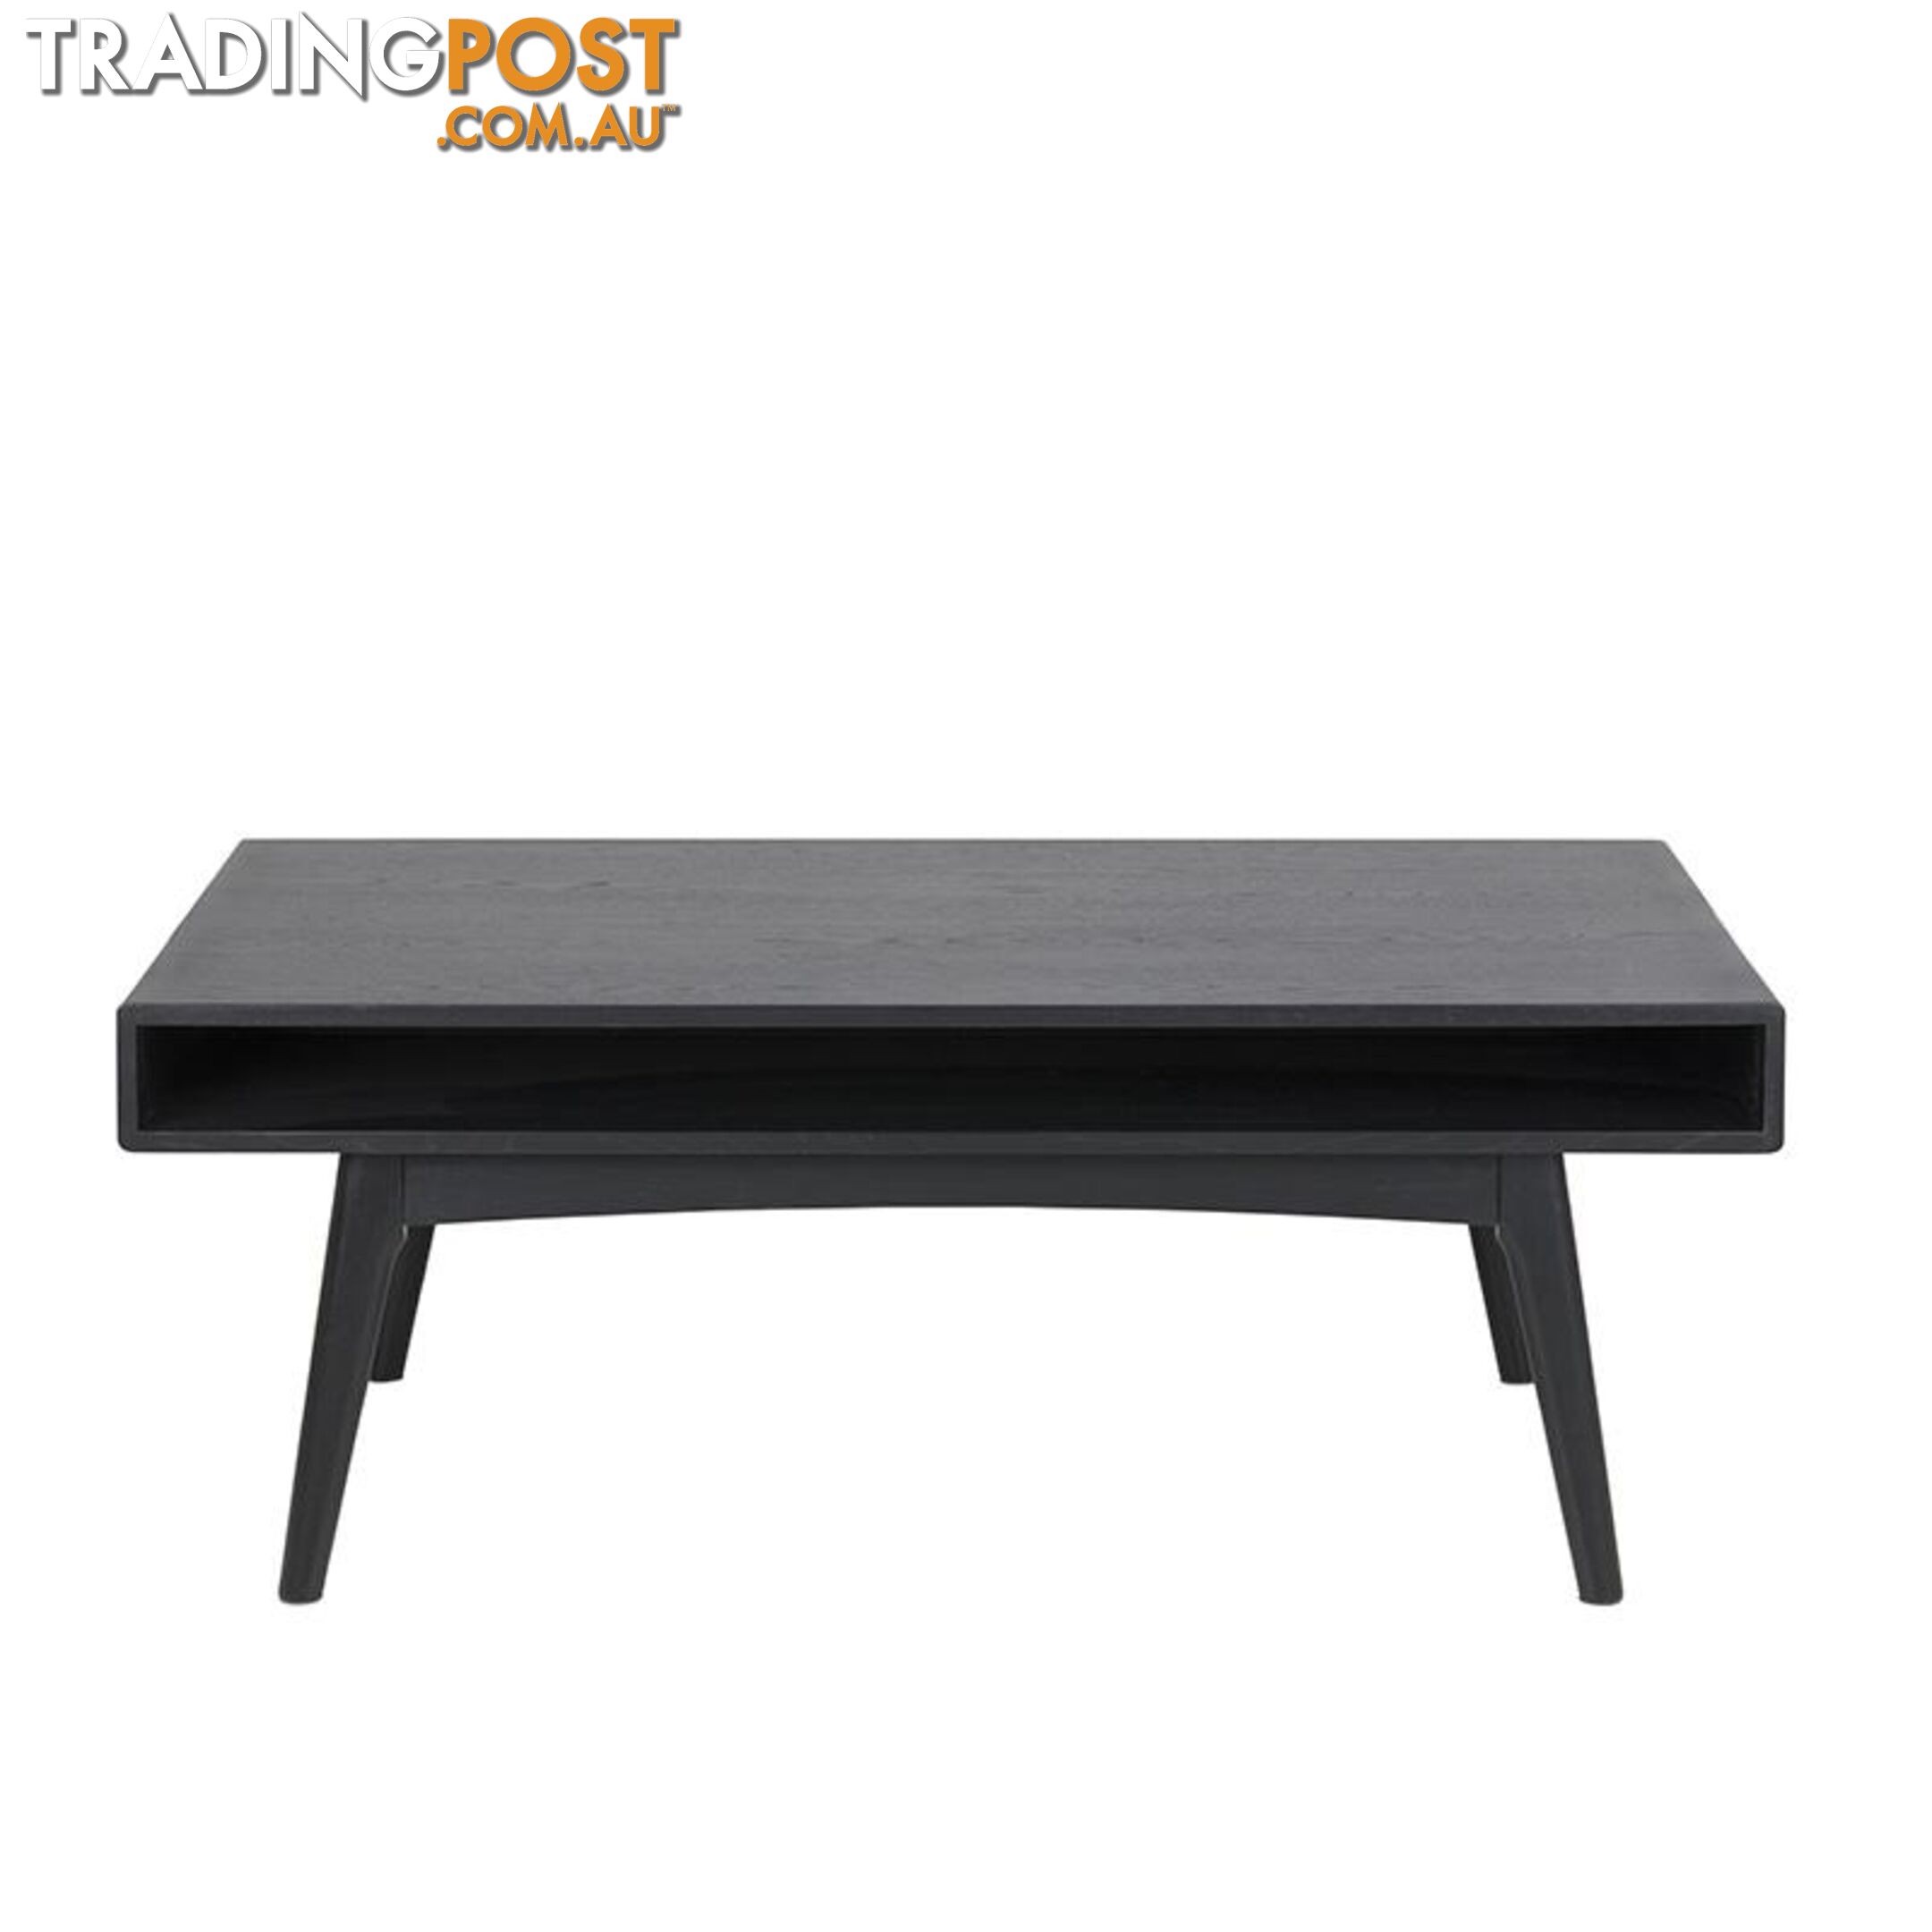 MAKO Coffee Table 130cm - Black - AC-0000078610 - 5713941028761